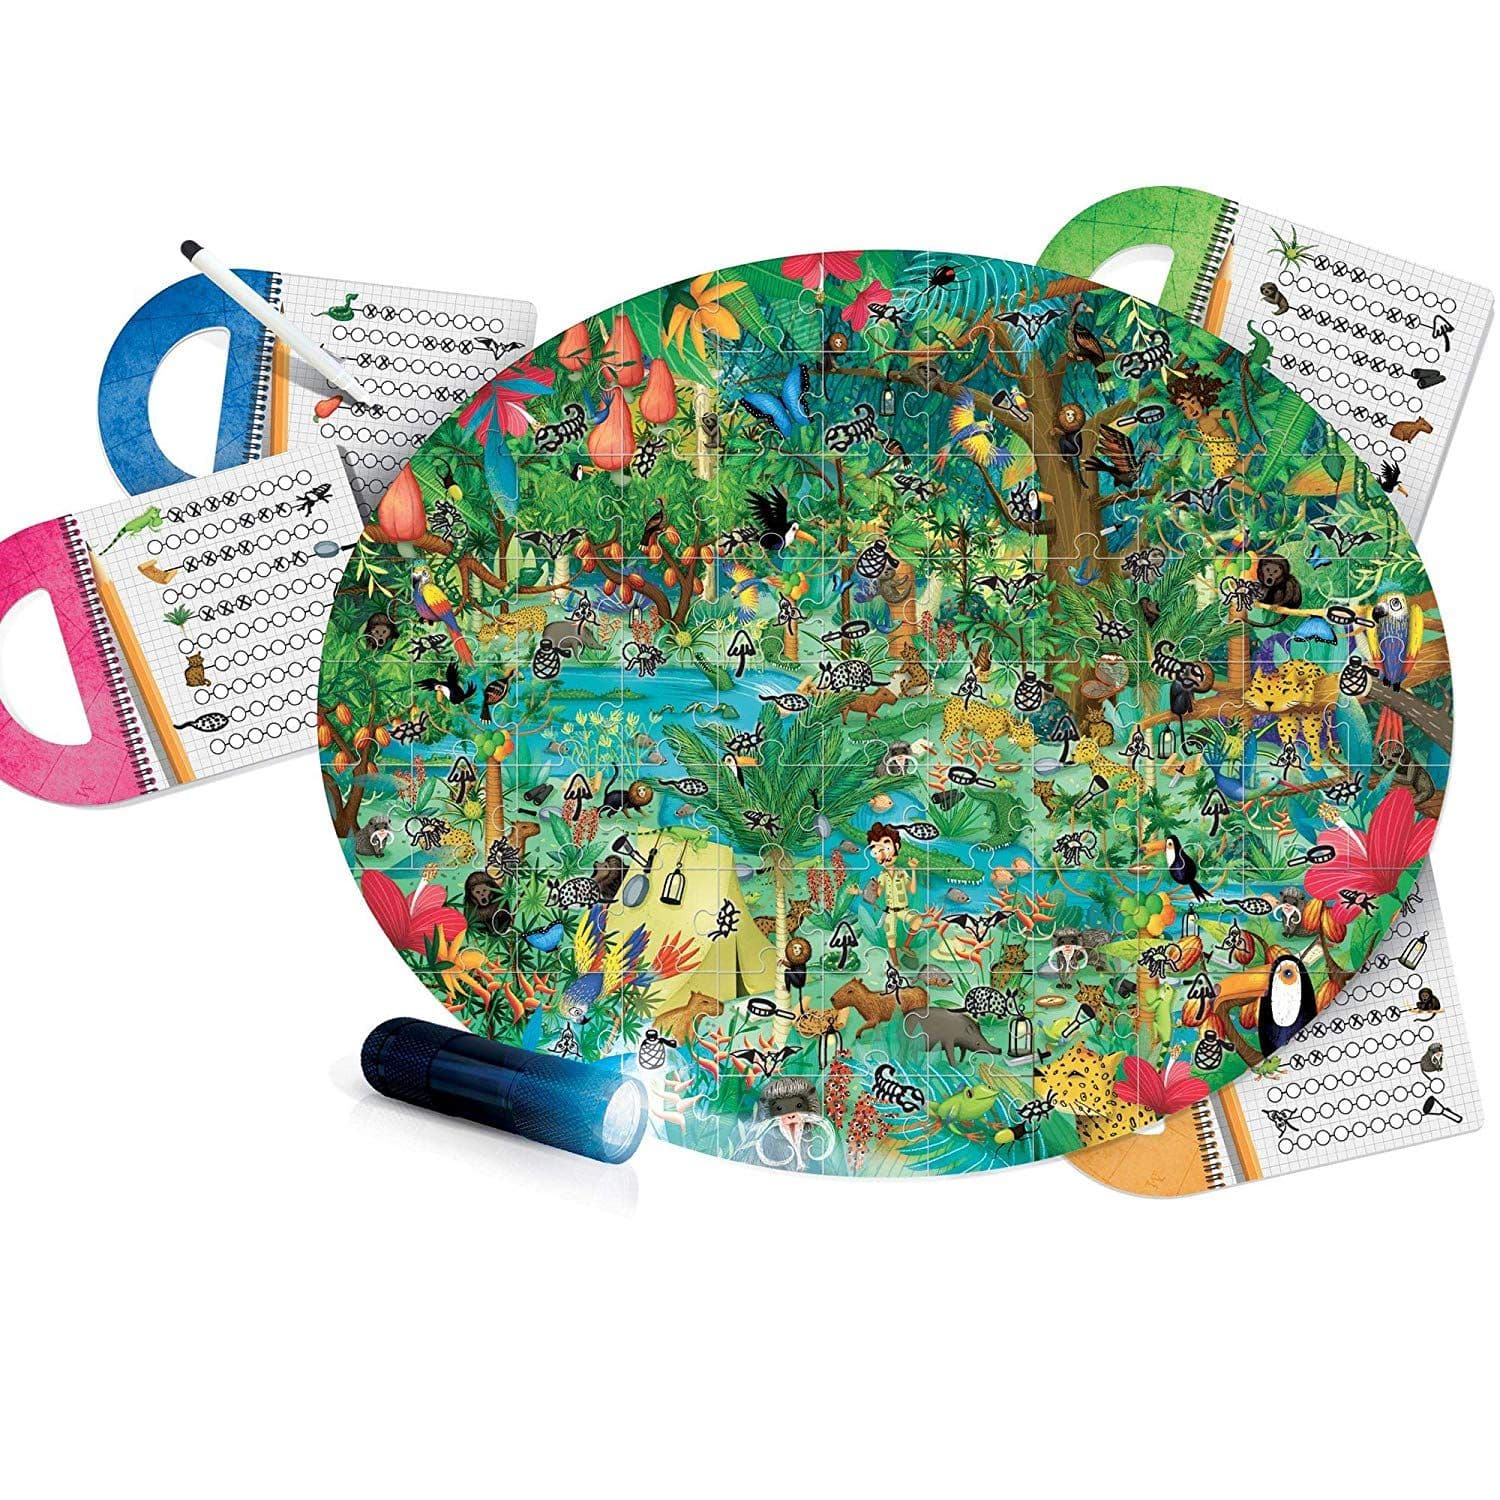 Explore The Forest Magic Light Kids Children Educational Jigsaw Puzzle